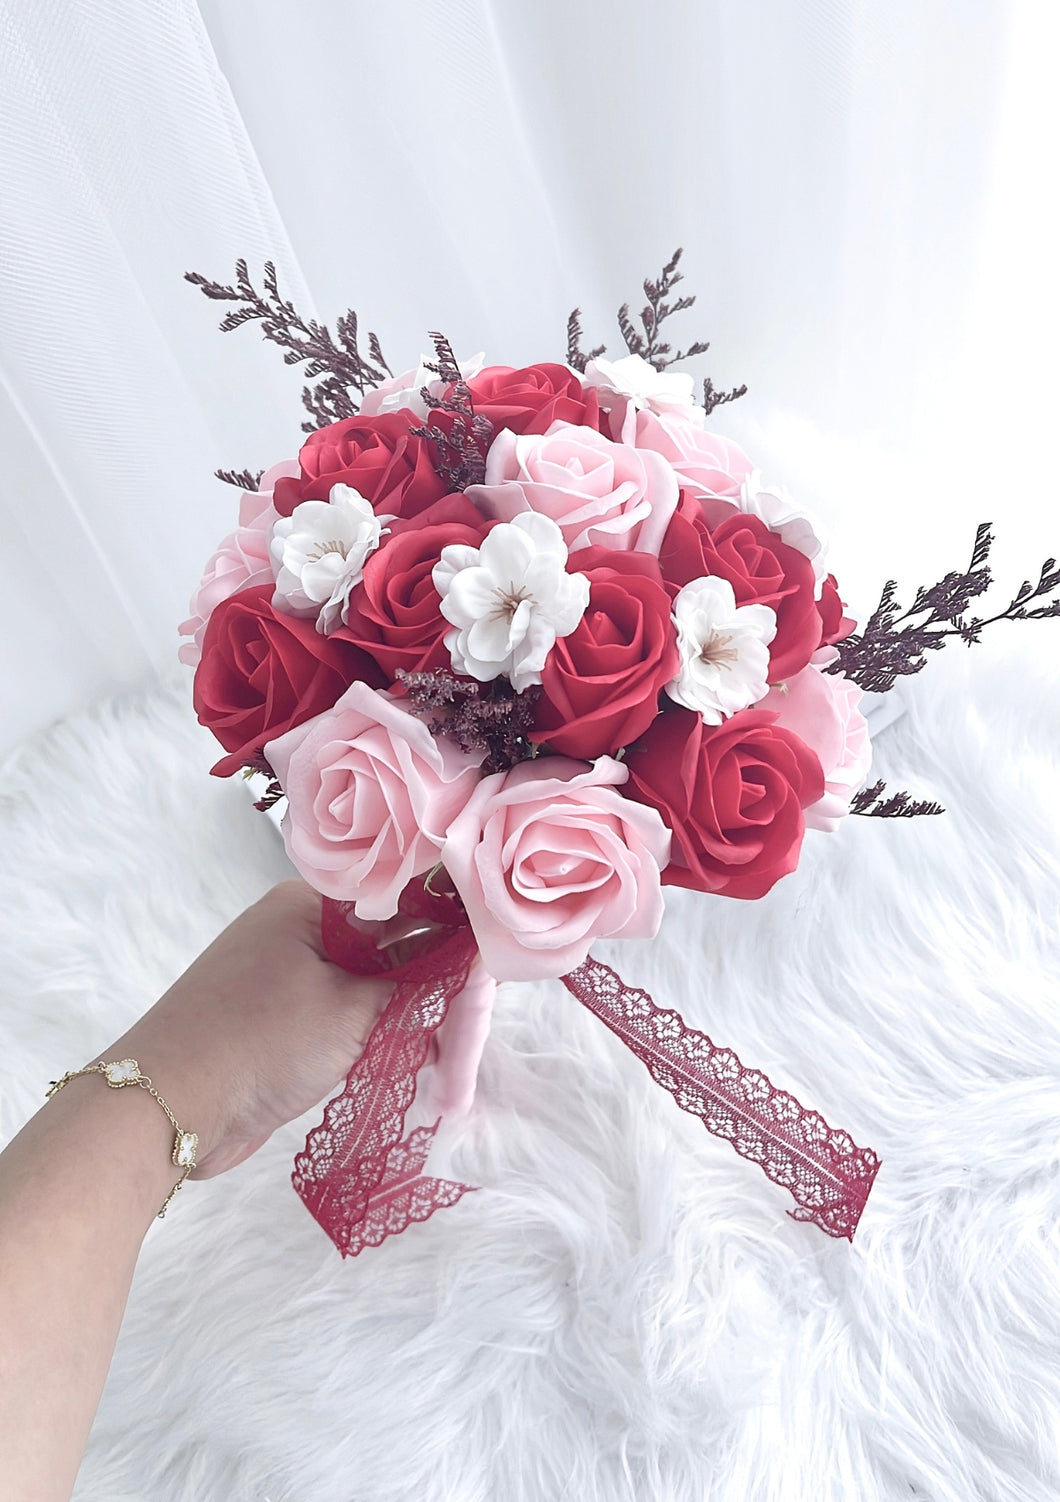 Pink and Red Soap Rose Bridal Bouquet 红粉色系香皂花玫瑰新娘手捧